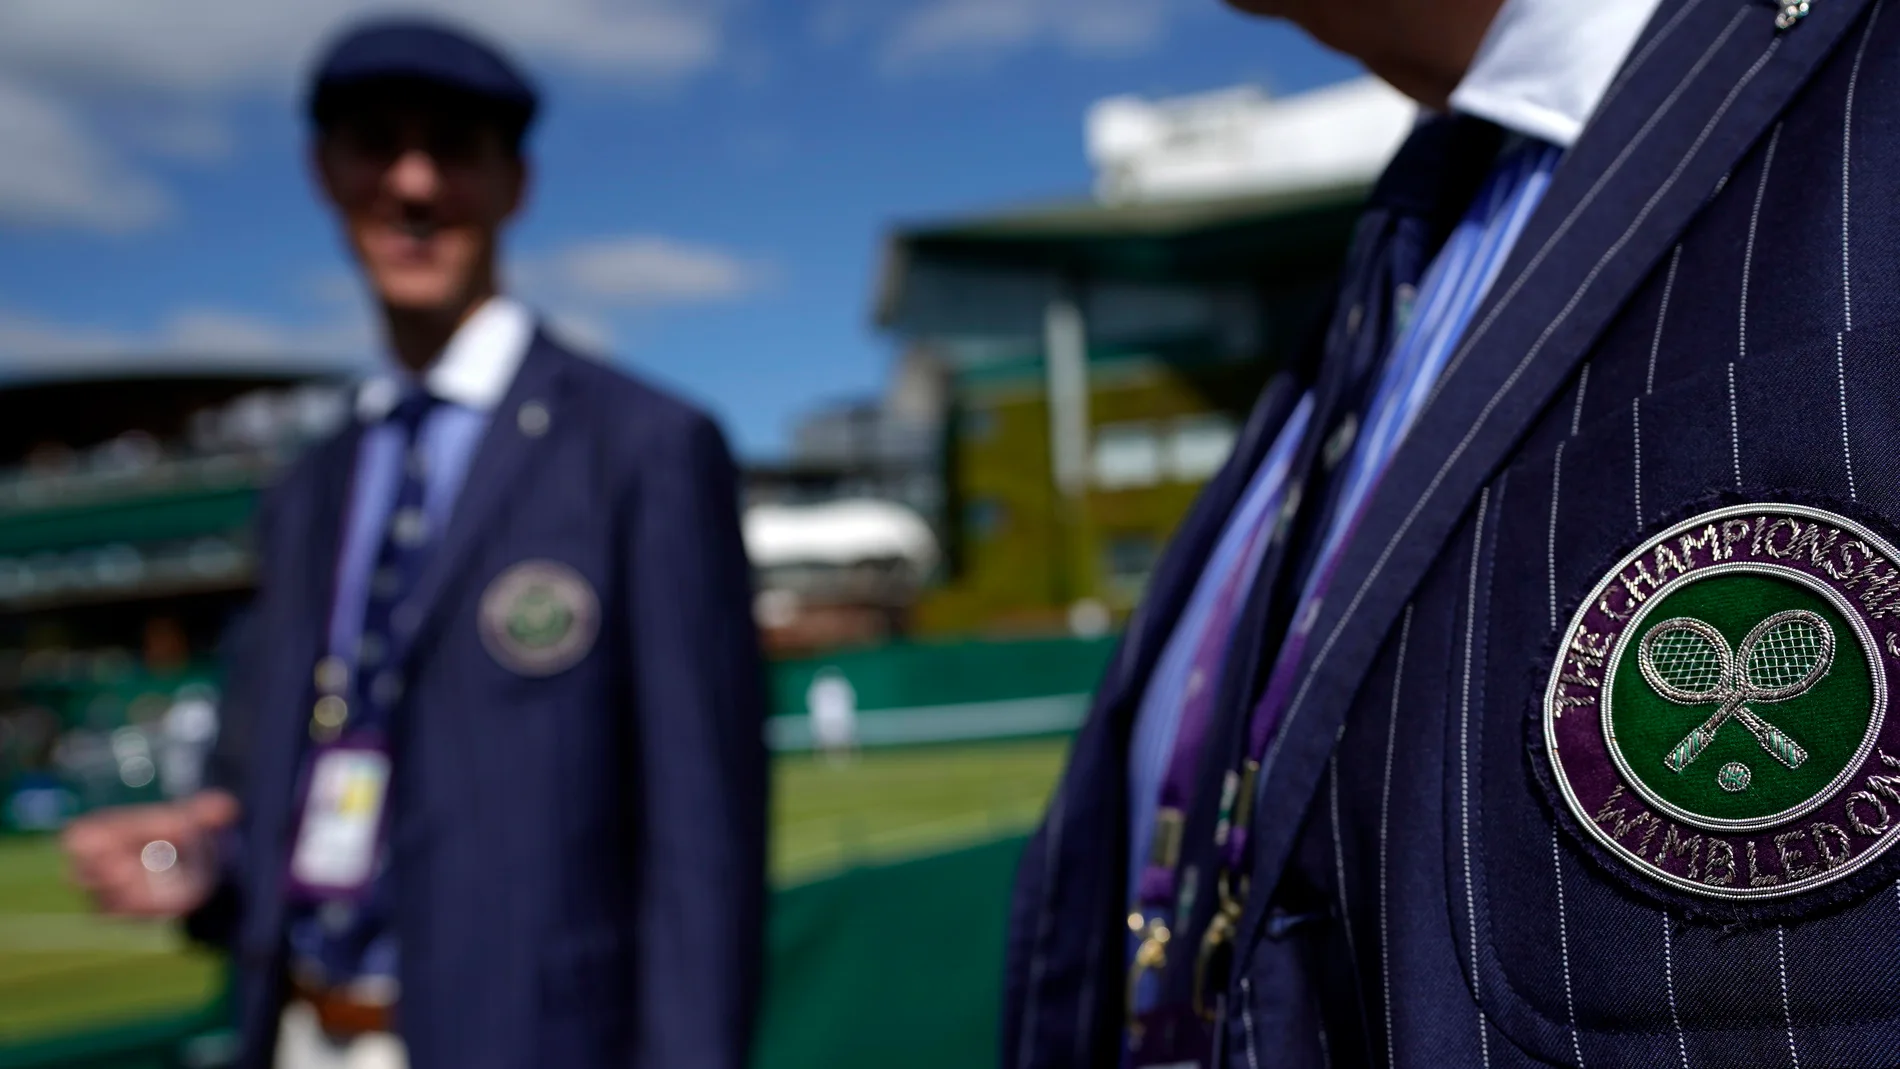 All England Lawn Tennis Club will postpone 2020 tournament